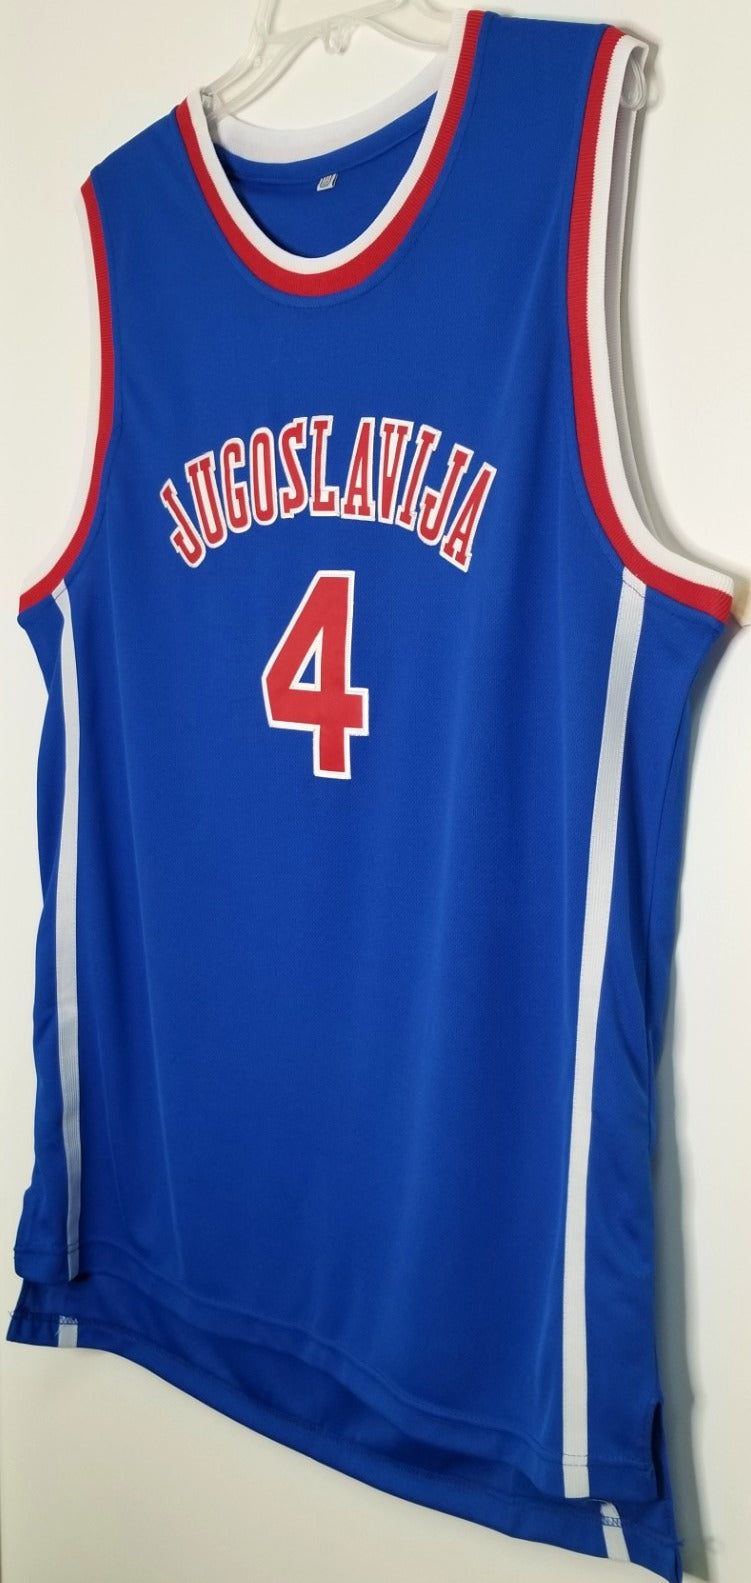 Vlade Divac Jugoslavija Yugoslavia Basketball Jersey New Sewn Blue